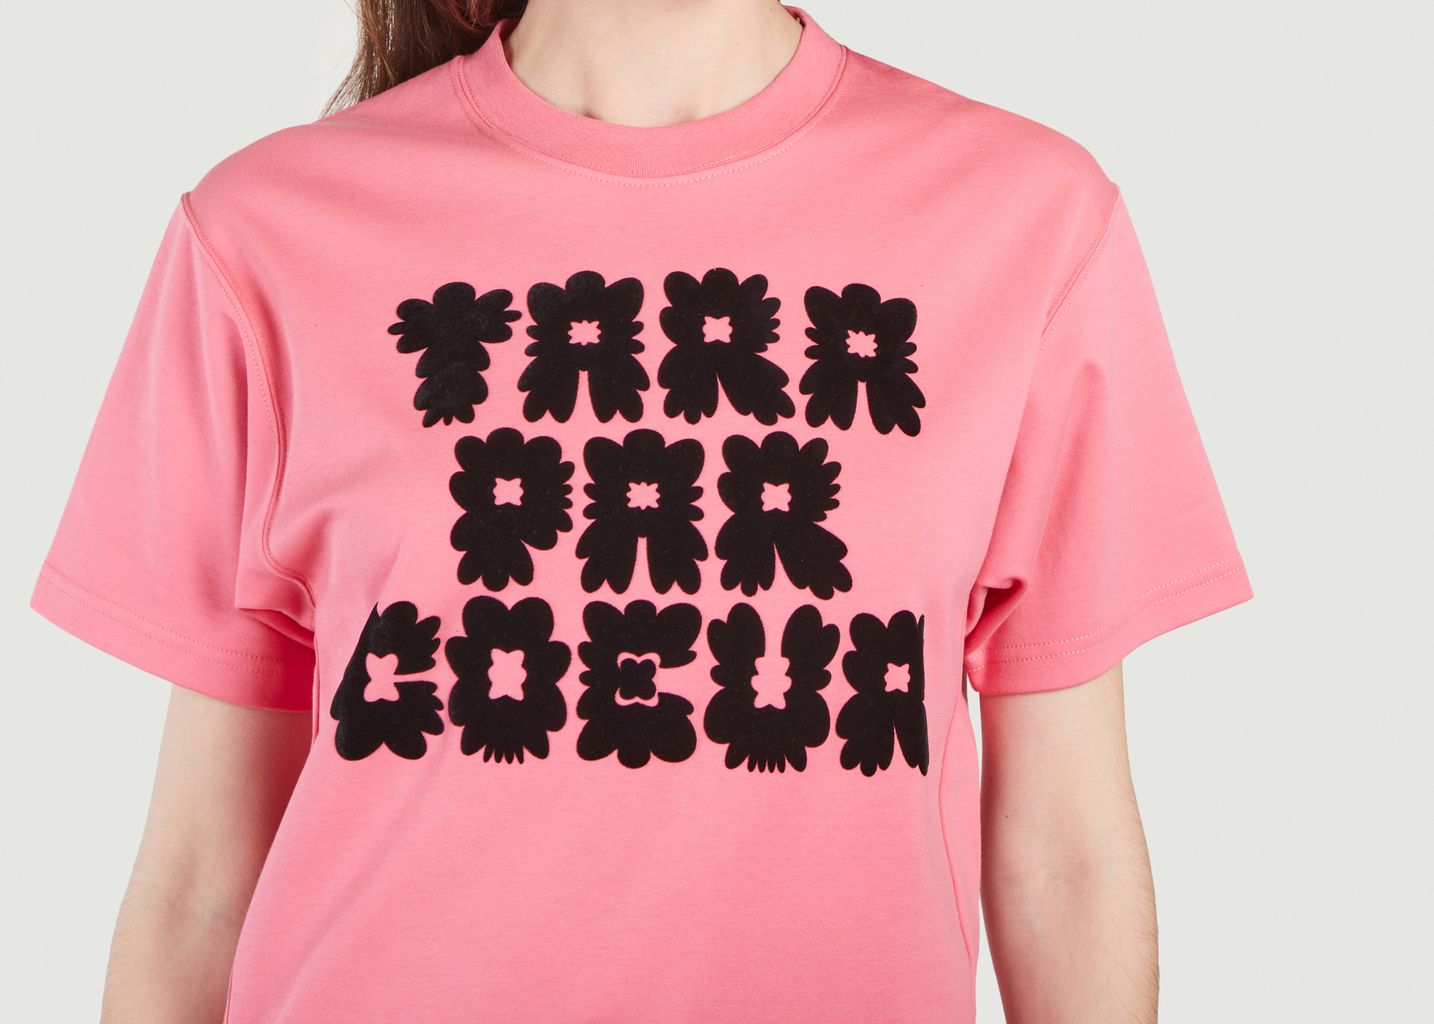 Loose-fitting T-shirt with shamrock lettering - Tara Jarmon